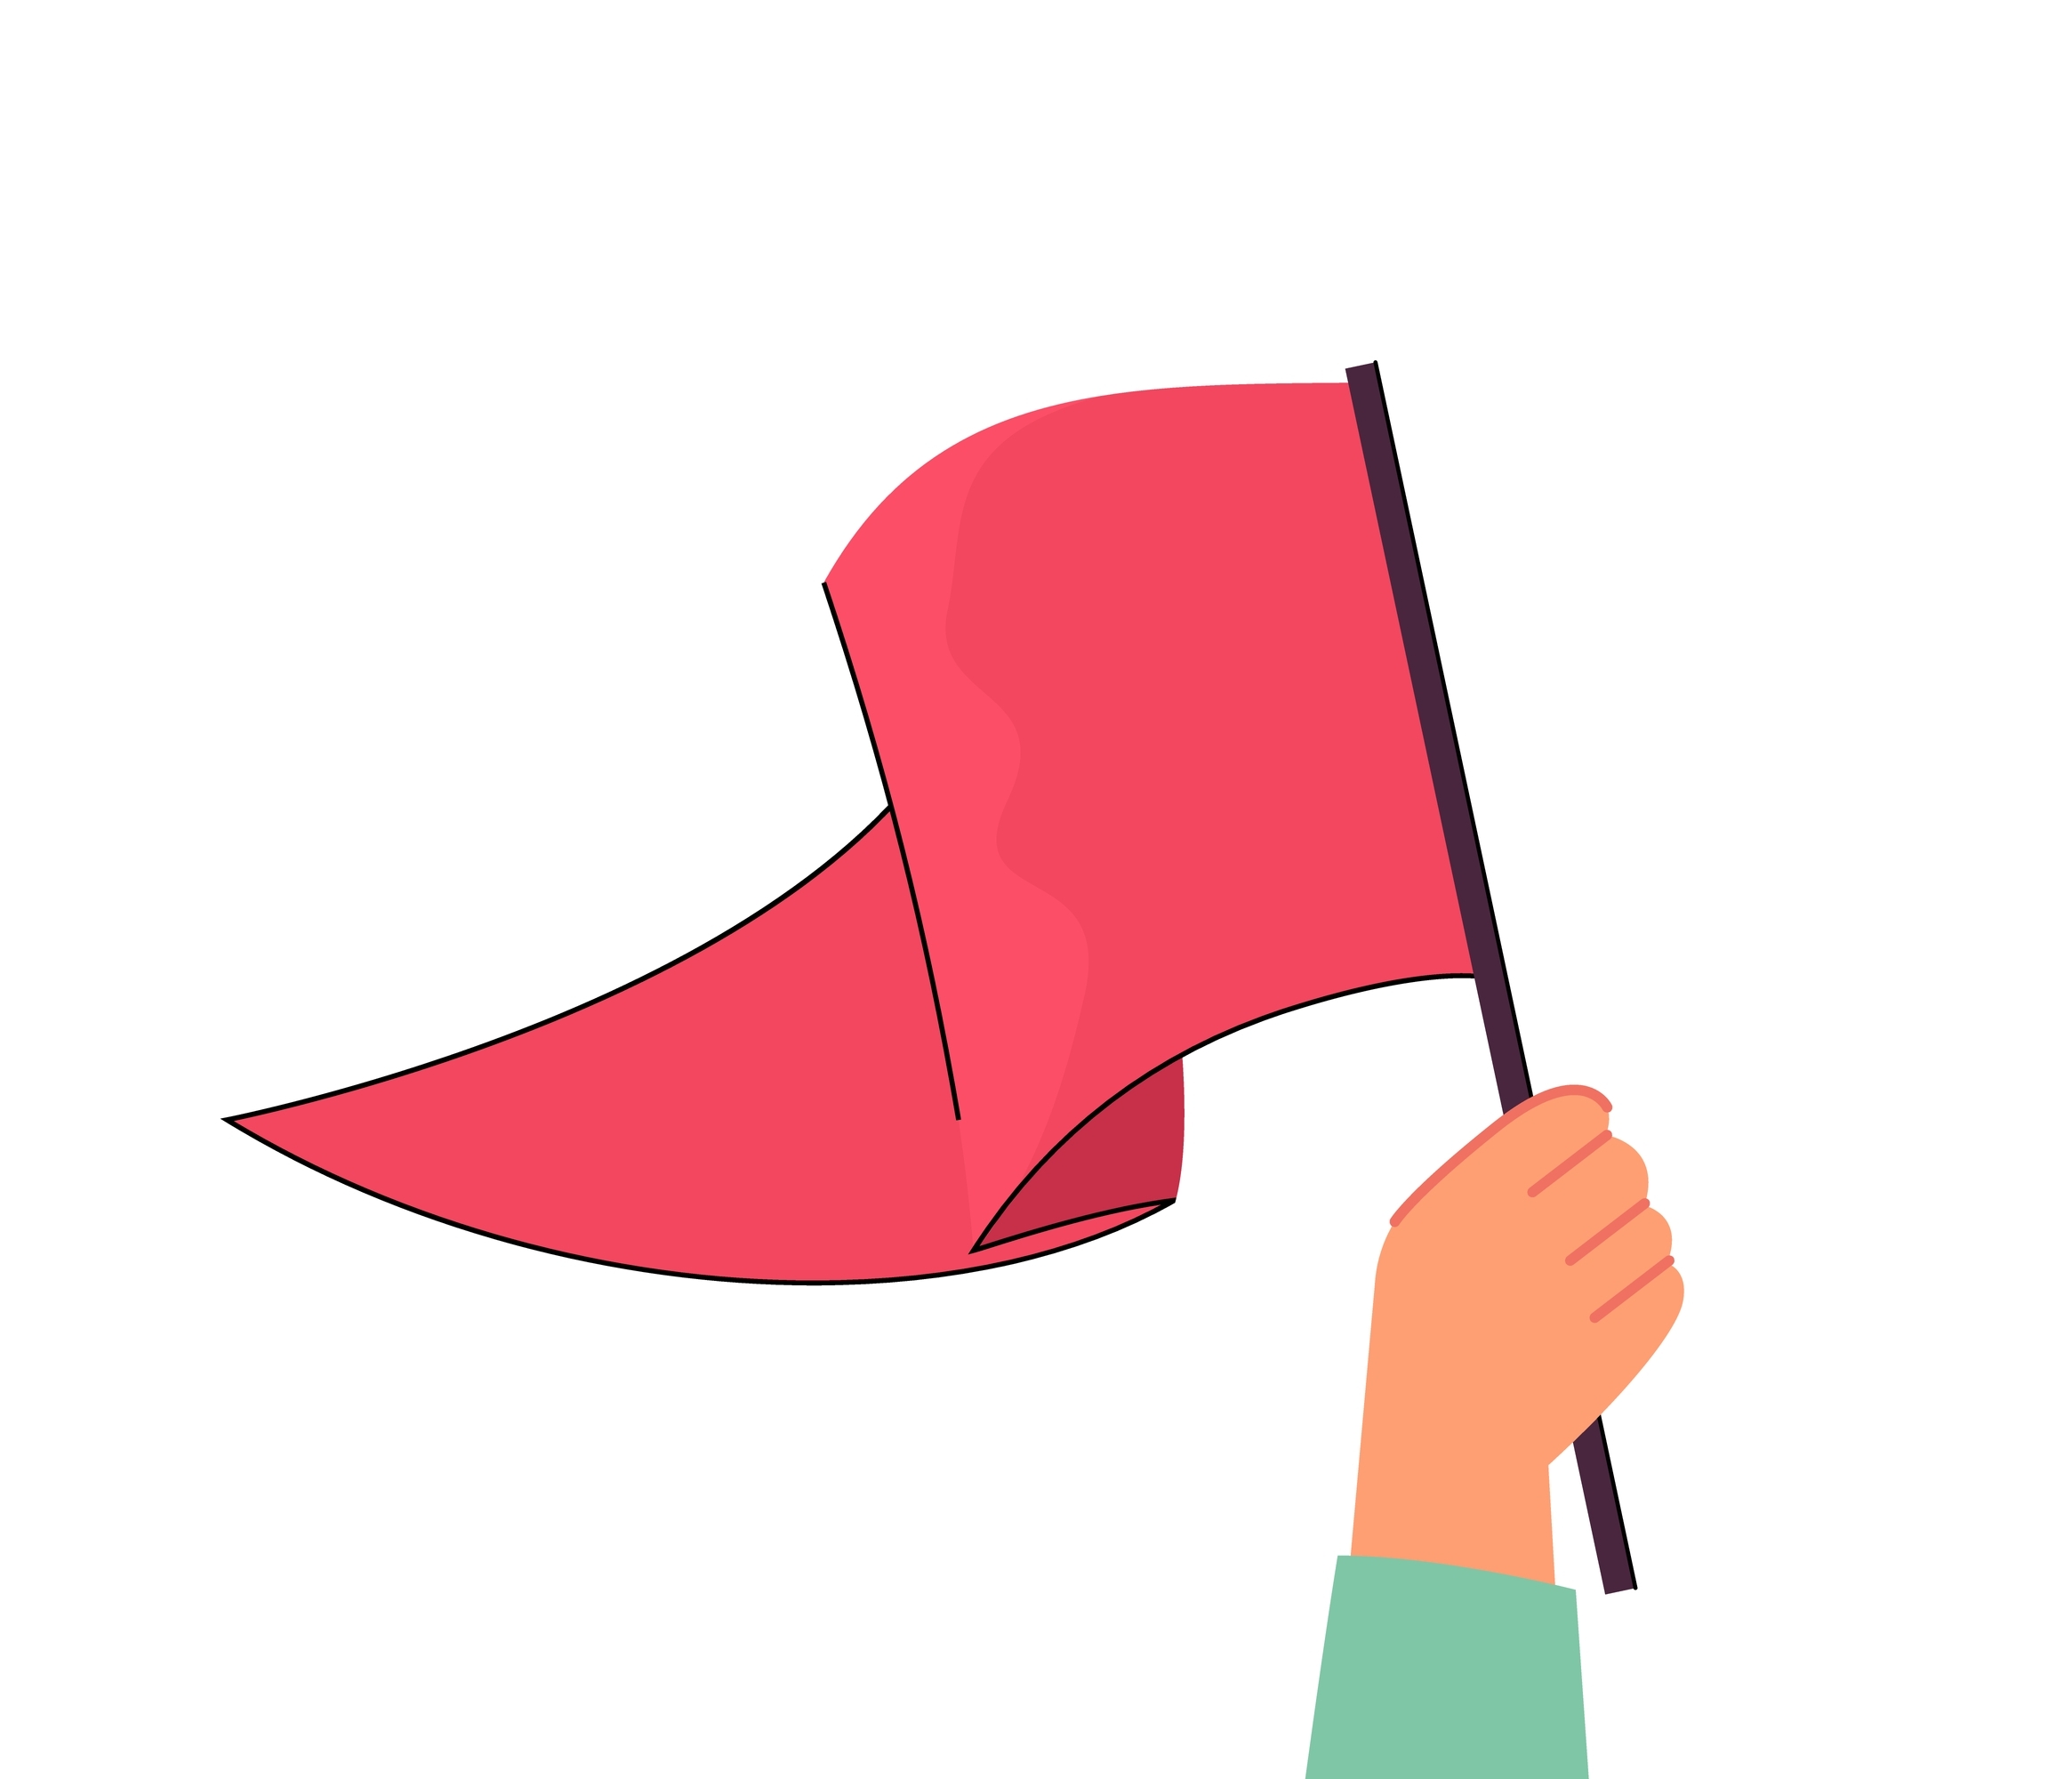 red flag in hand illustration